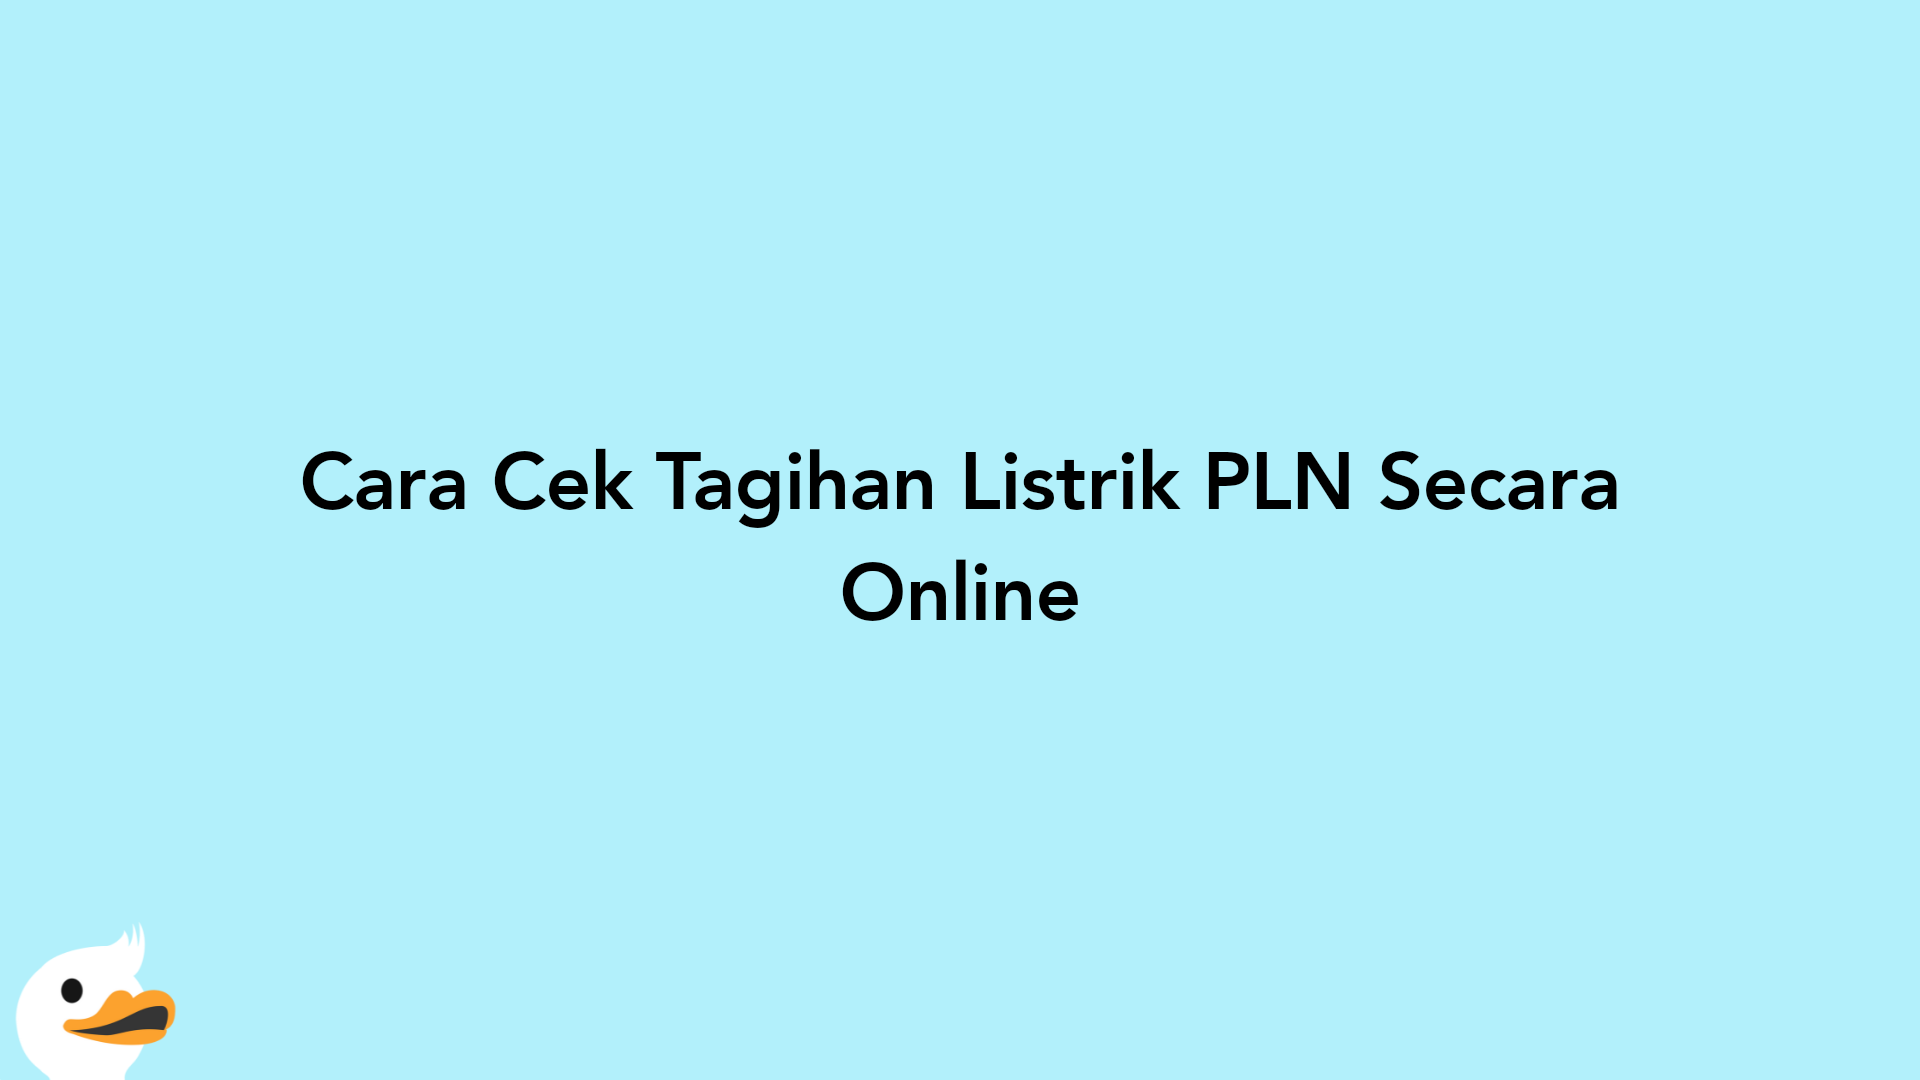 Cara Cek Tagihan Listrik PLN Secara Online